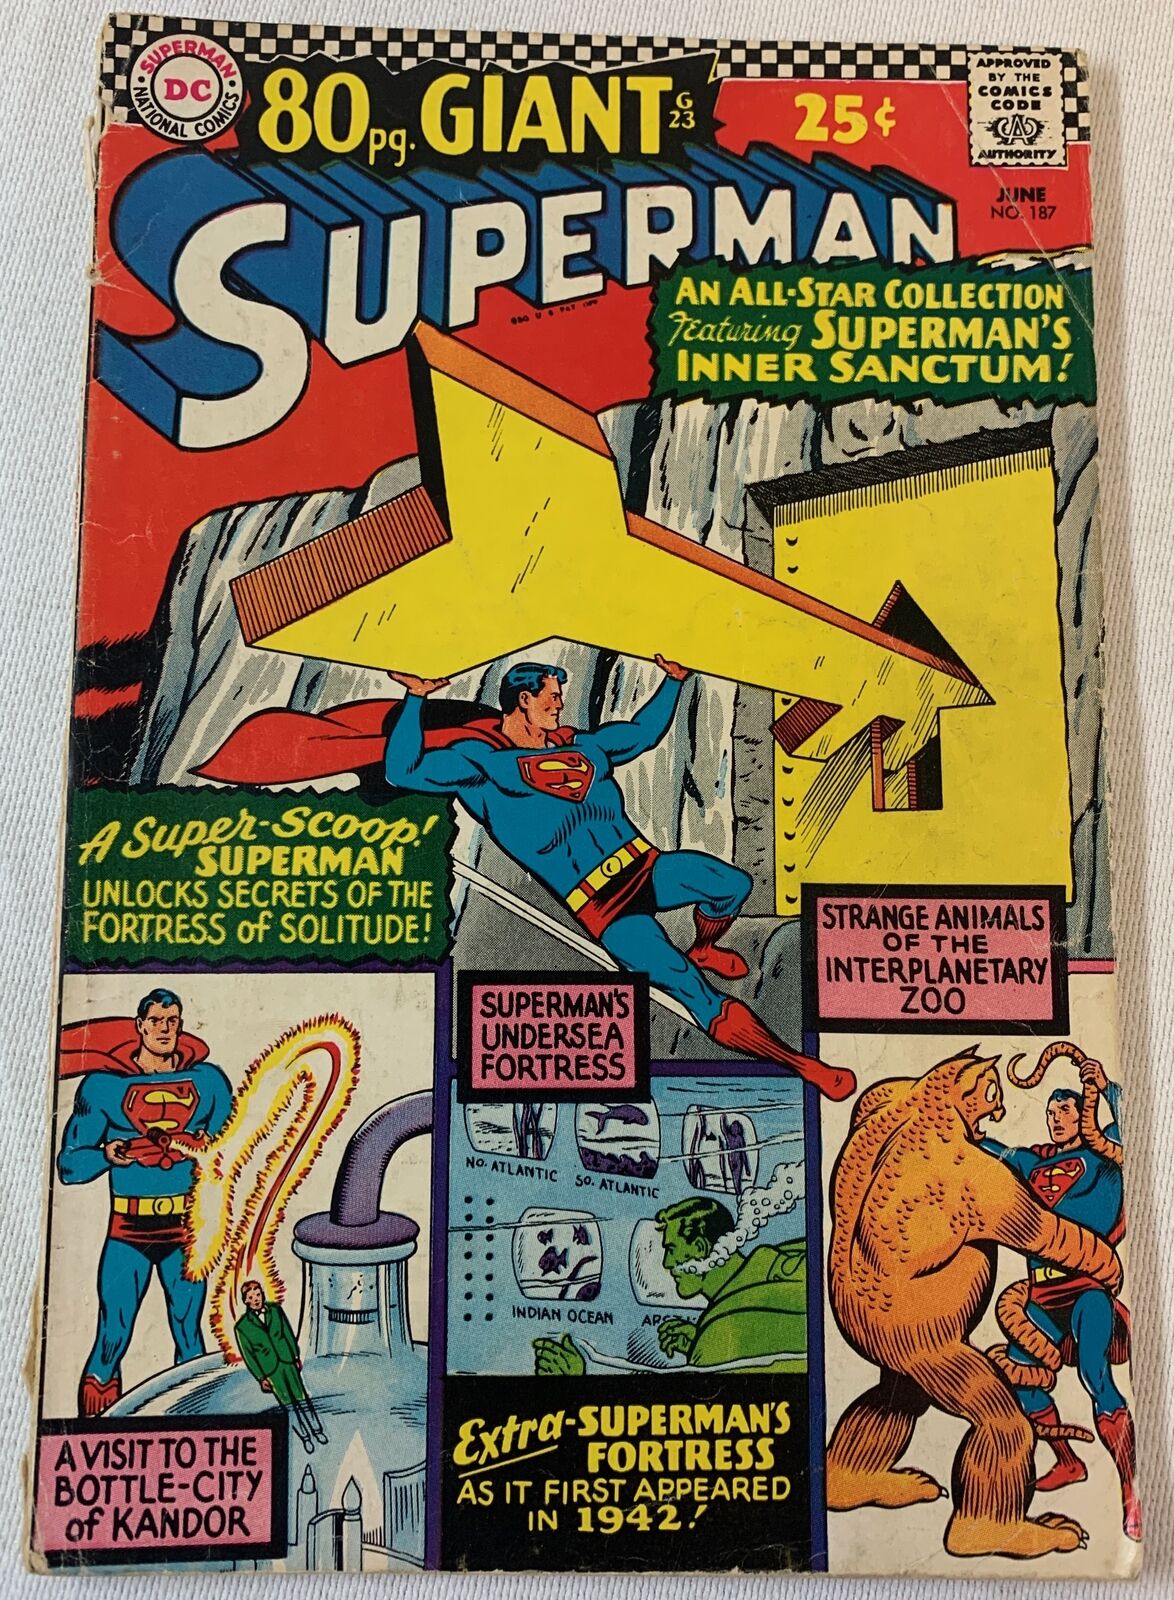 1966 DC Comics SUPERMAN #187 ~ low grade, covers splitting